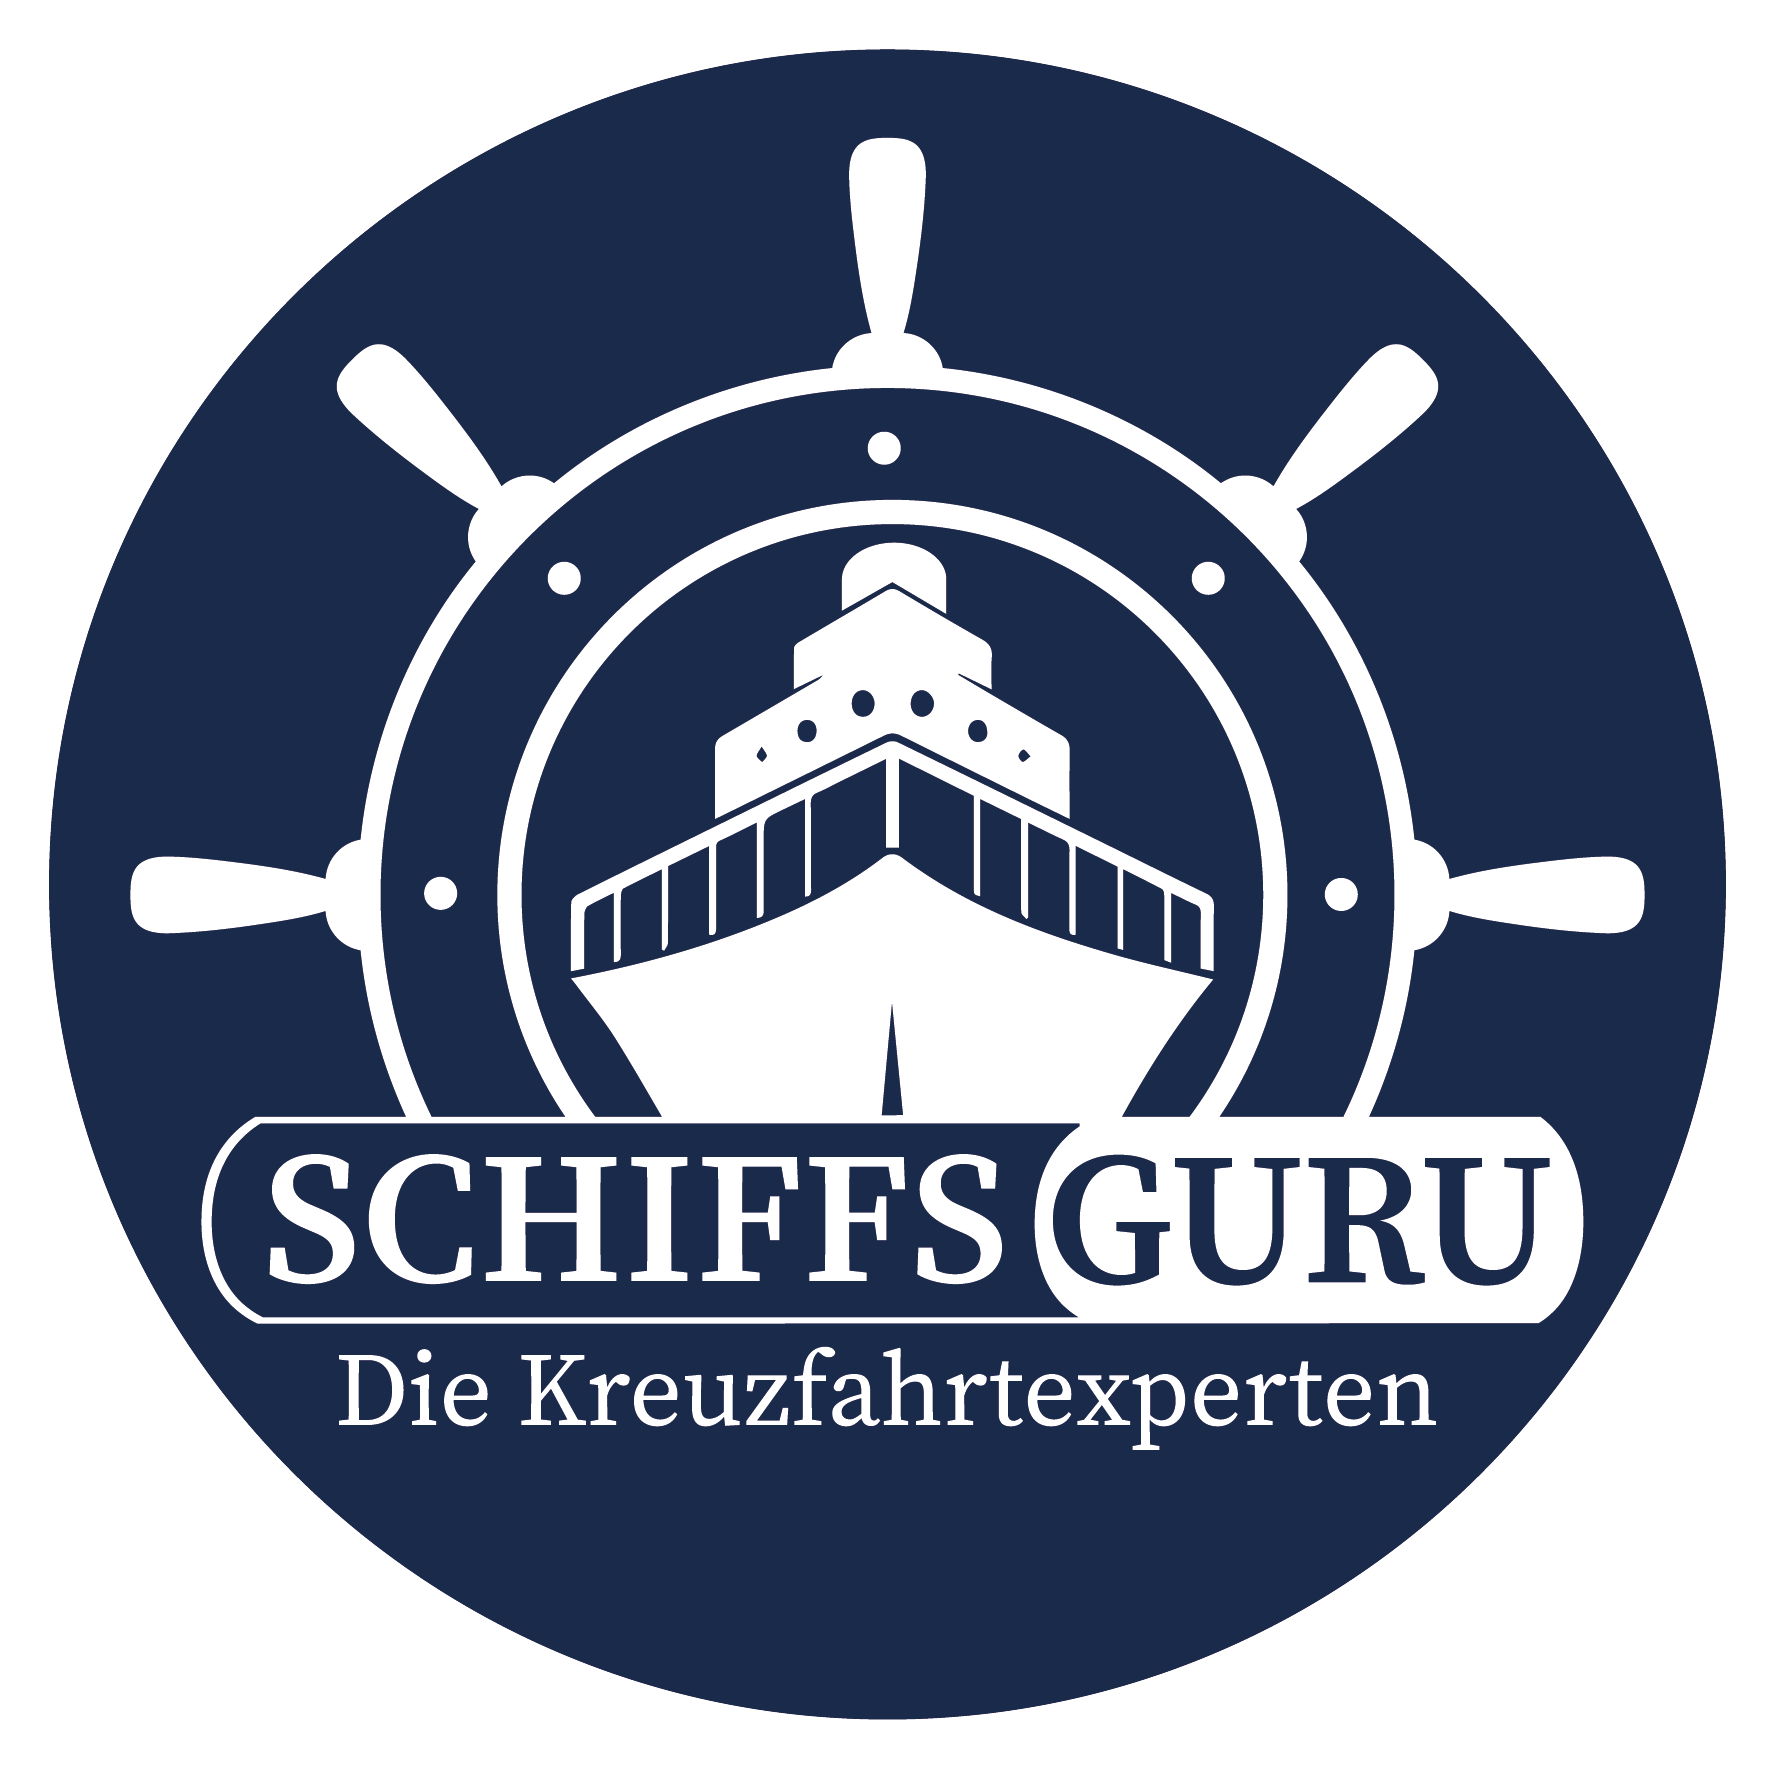 Schiffsguru Logo Blau